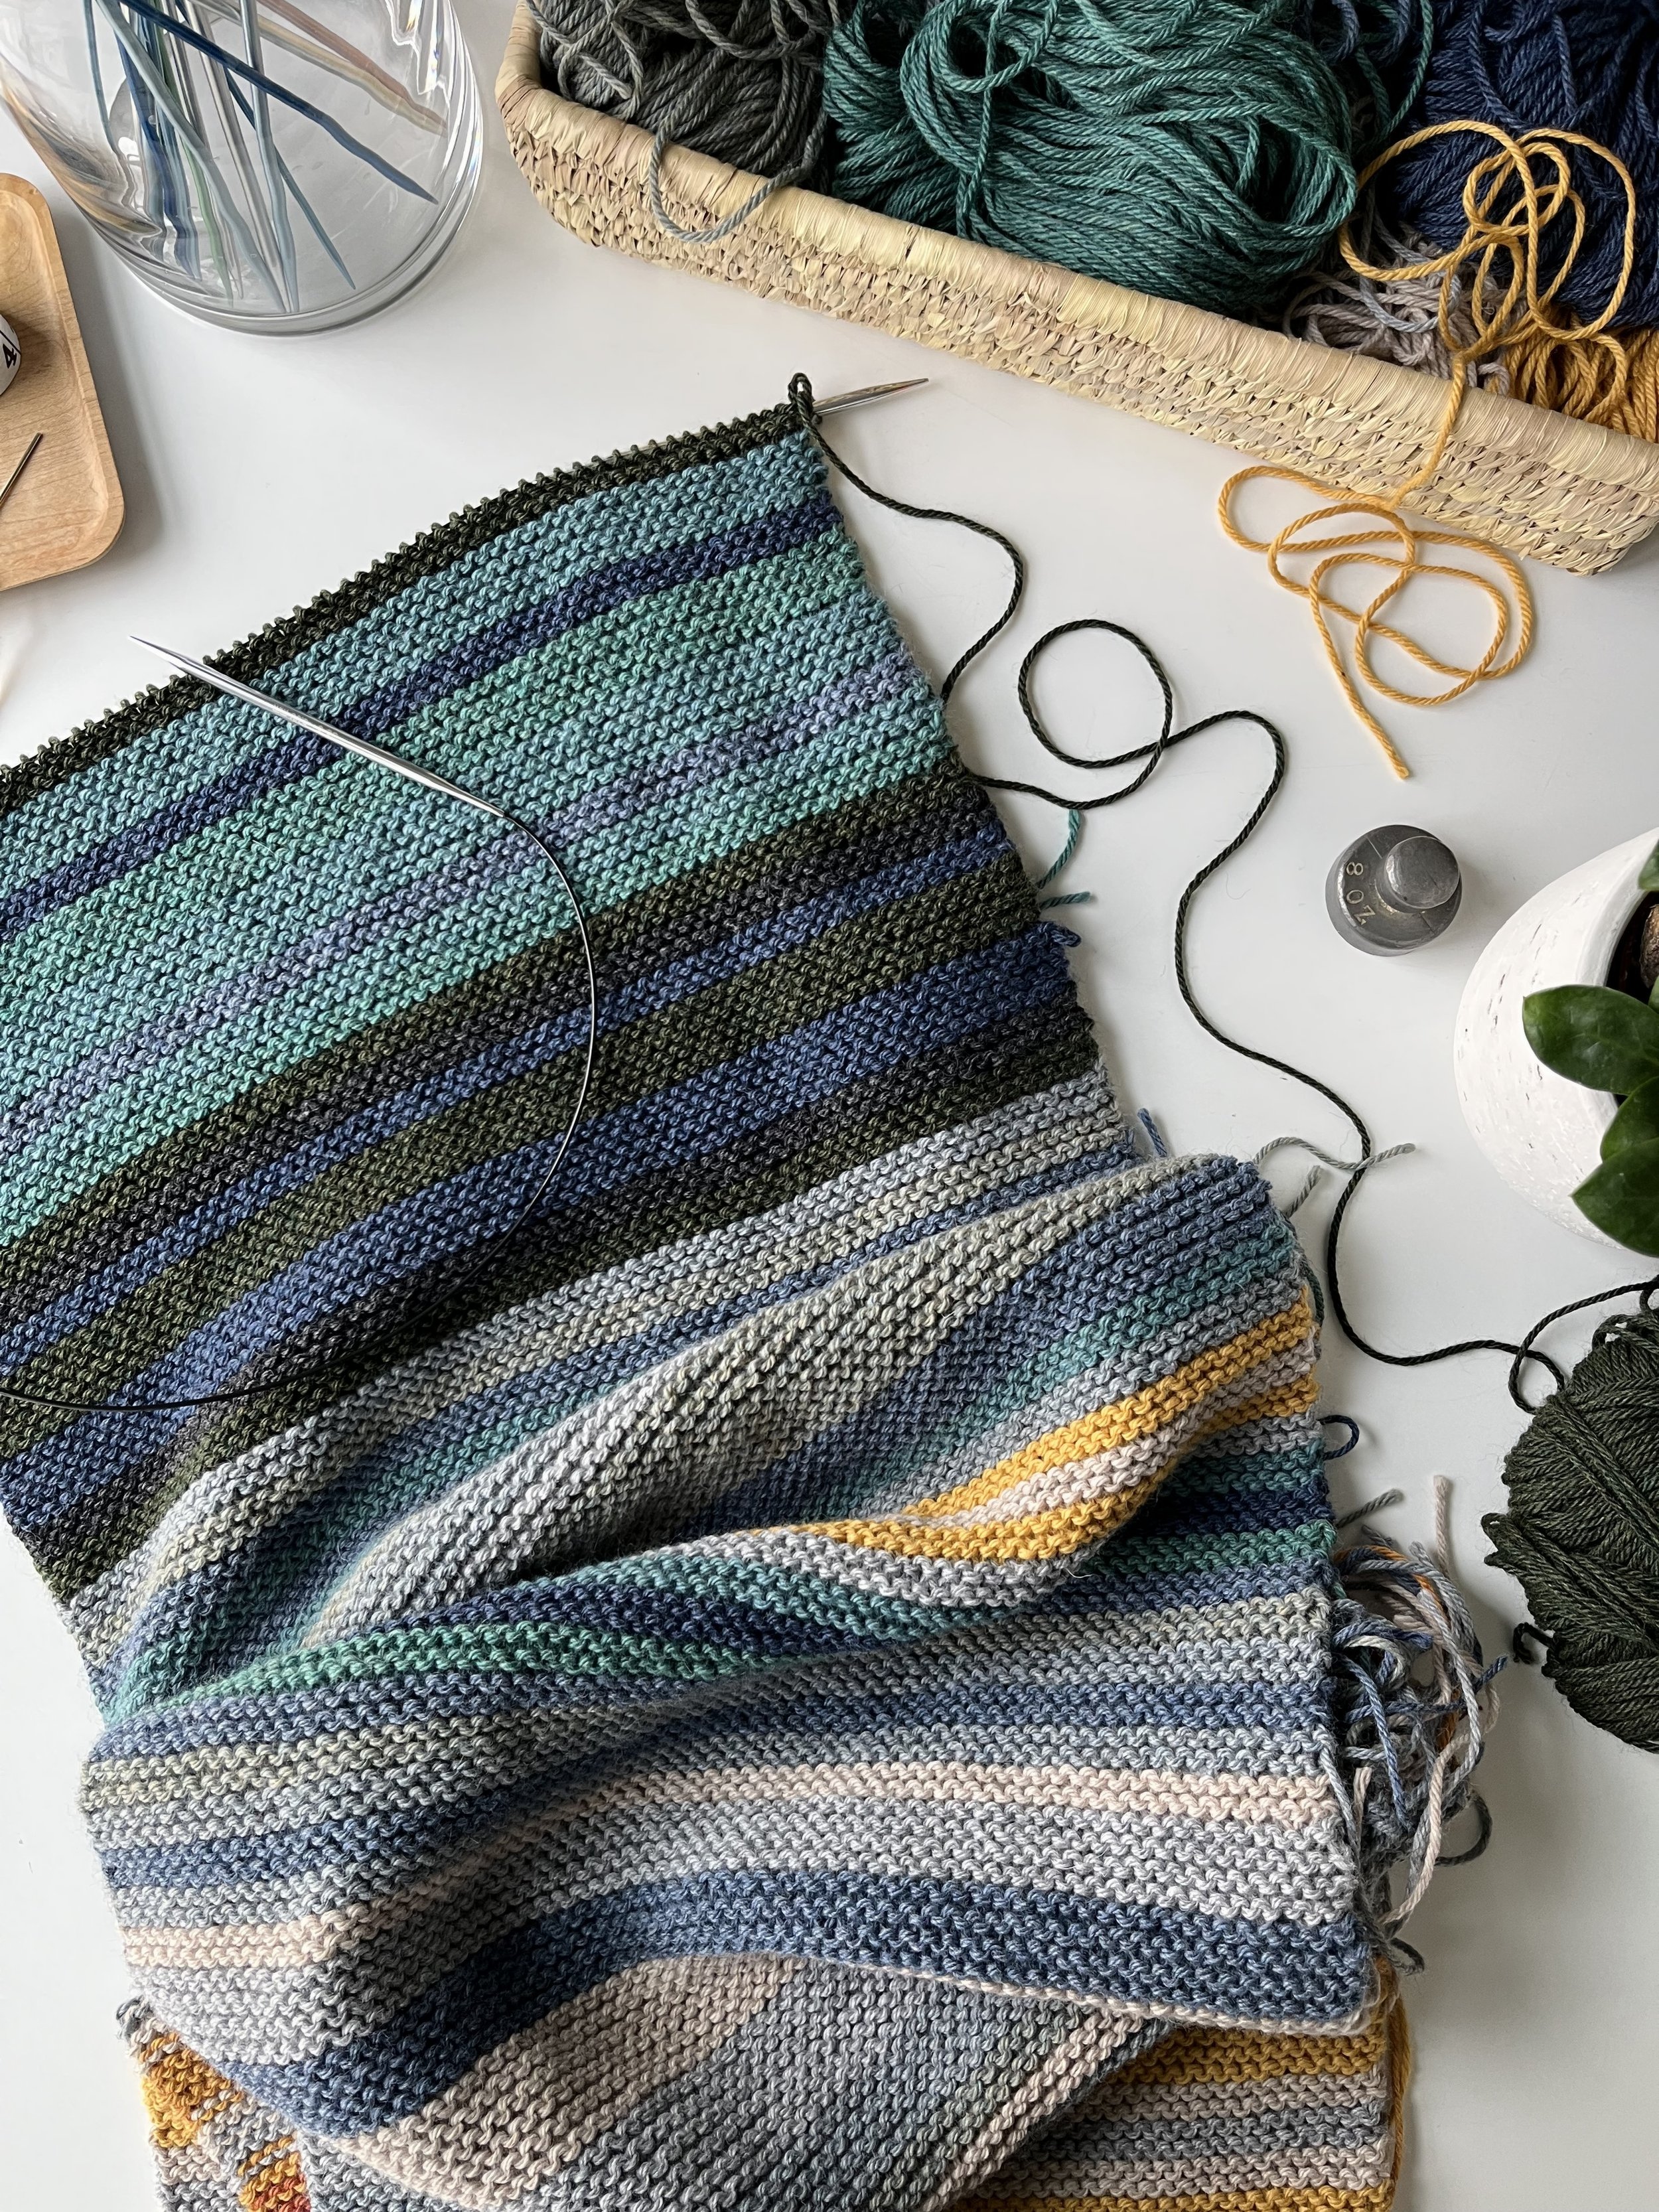 My Temperature Blanket Knitting Project 2022 Panel 3 Berroco Vintage Worsted Yarn Stripes Garter Stitch Sept Oct Nov 3 20 2023.jpg